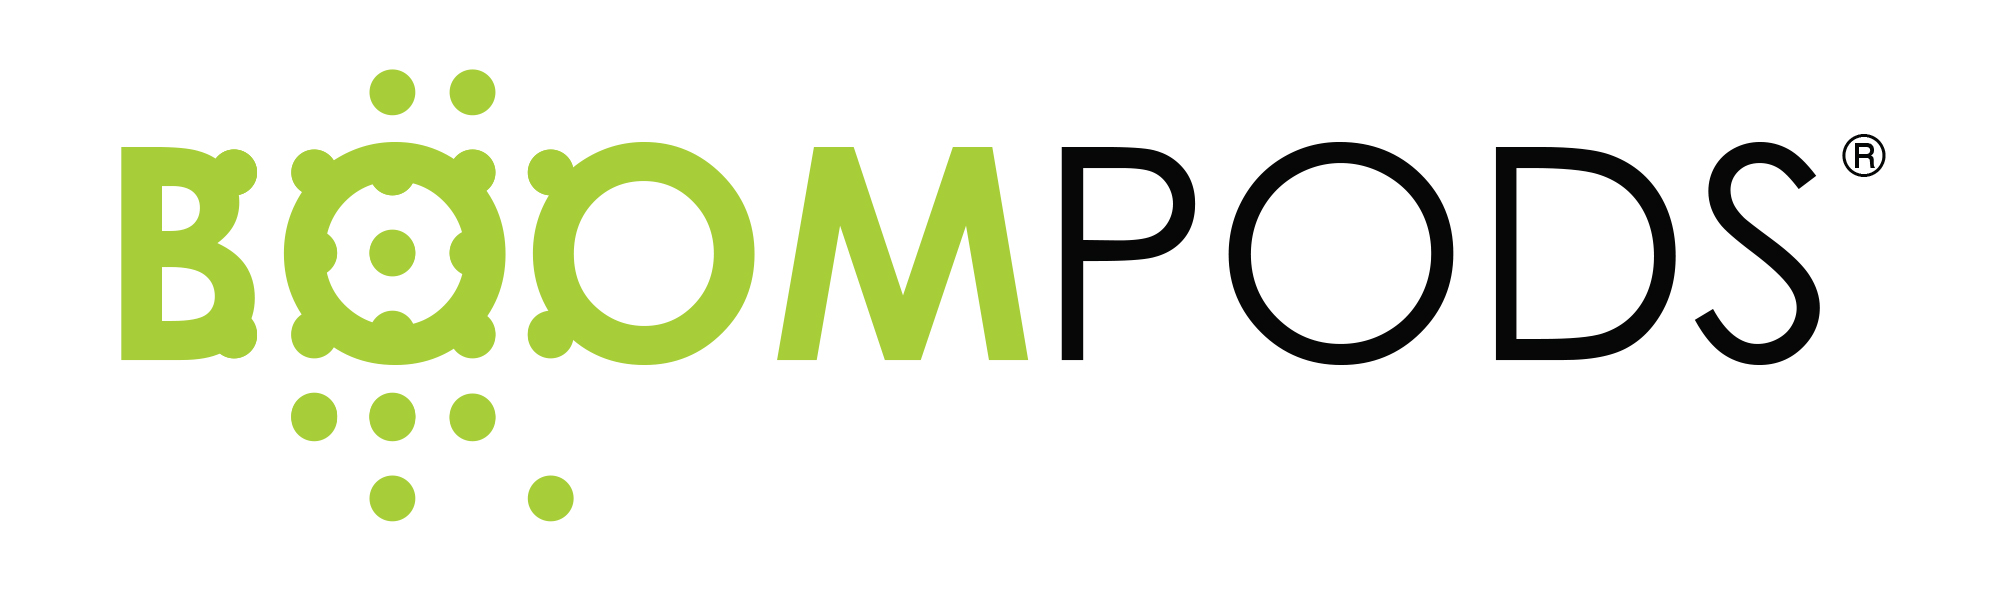 Boompods (HK) Ltd